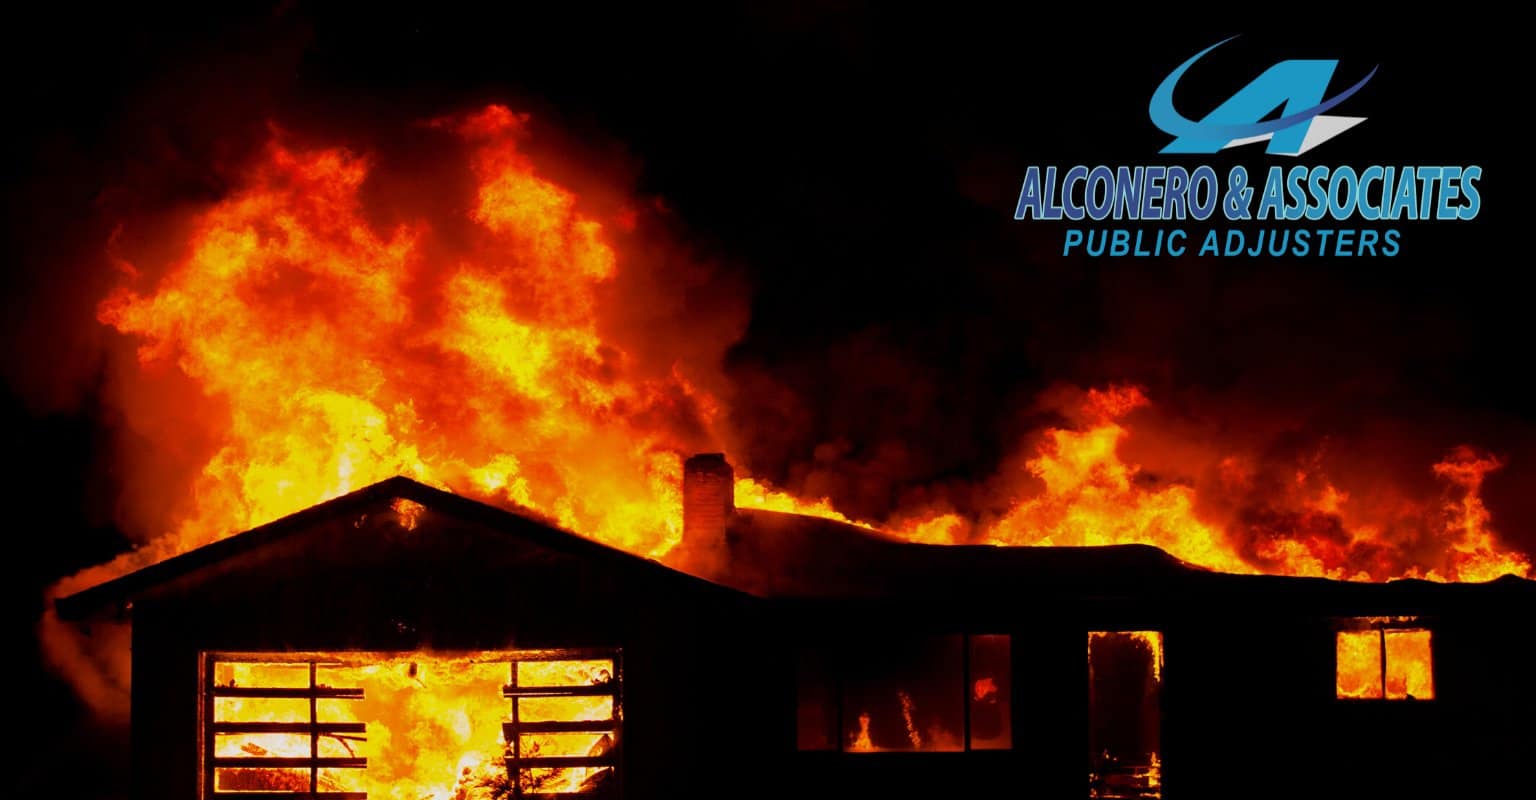 Smoke damage claim assistance with Alconero & Associates Public Adjusters